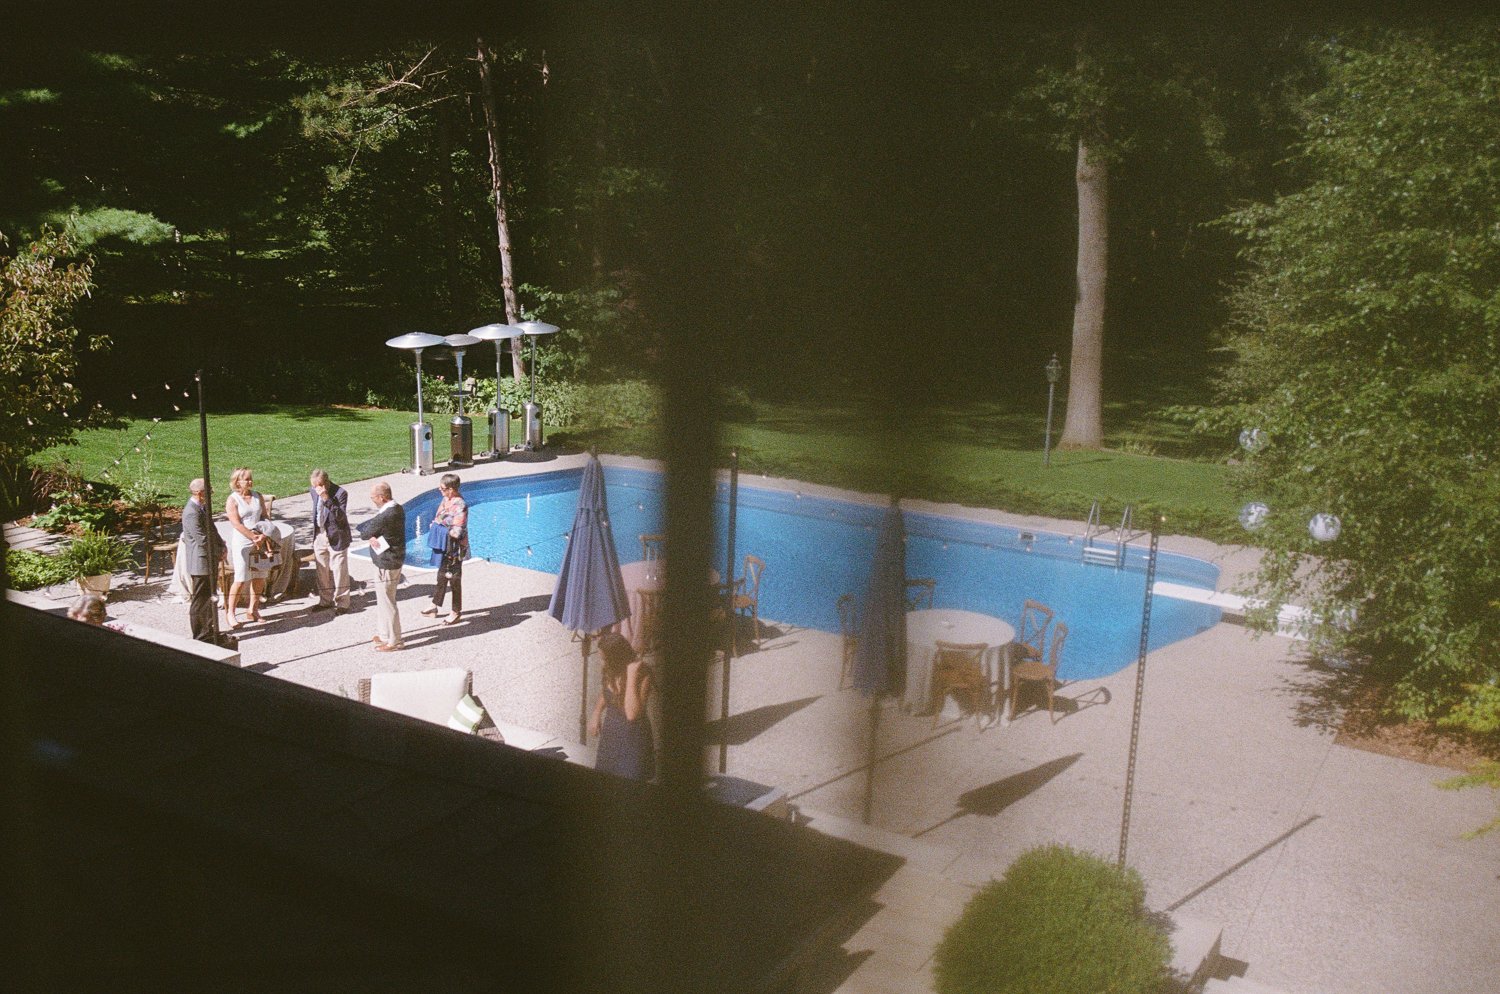 Backyard-Elopement-on-Film-Analog-Pool-Party-25.JPG